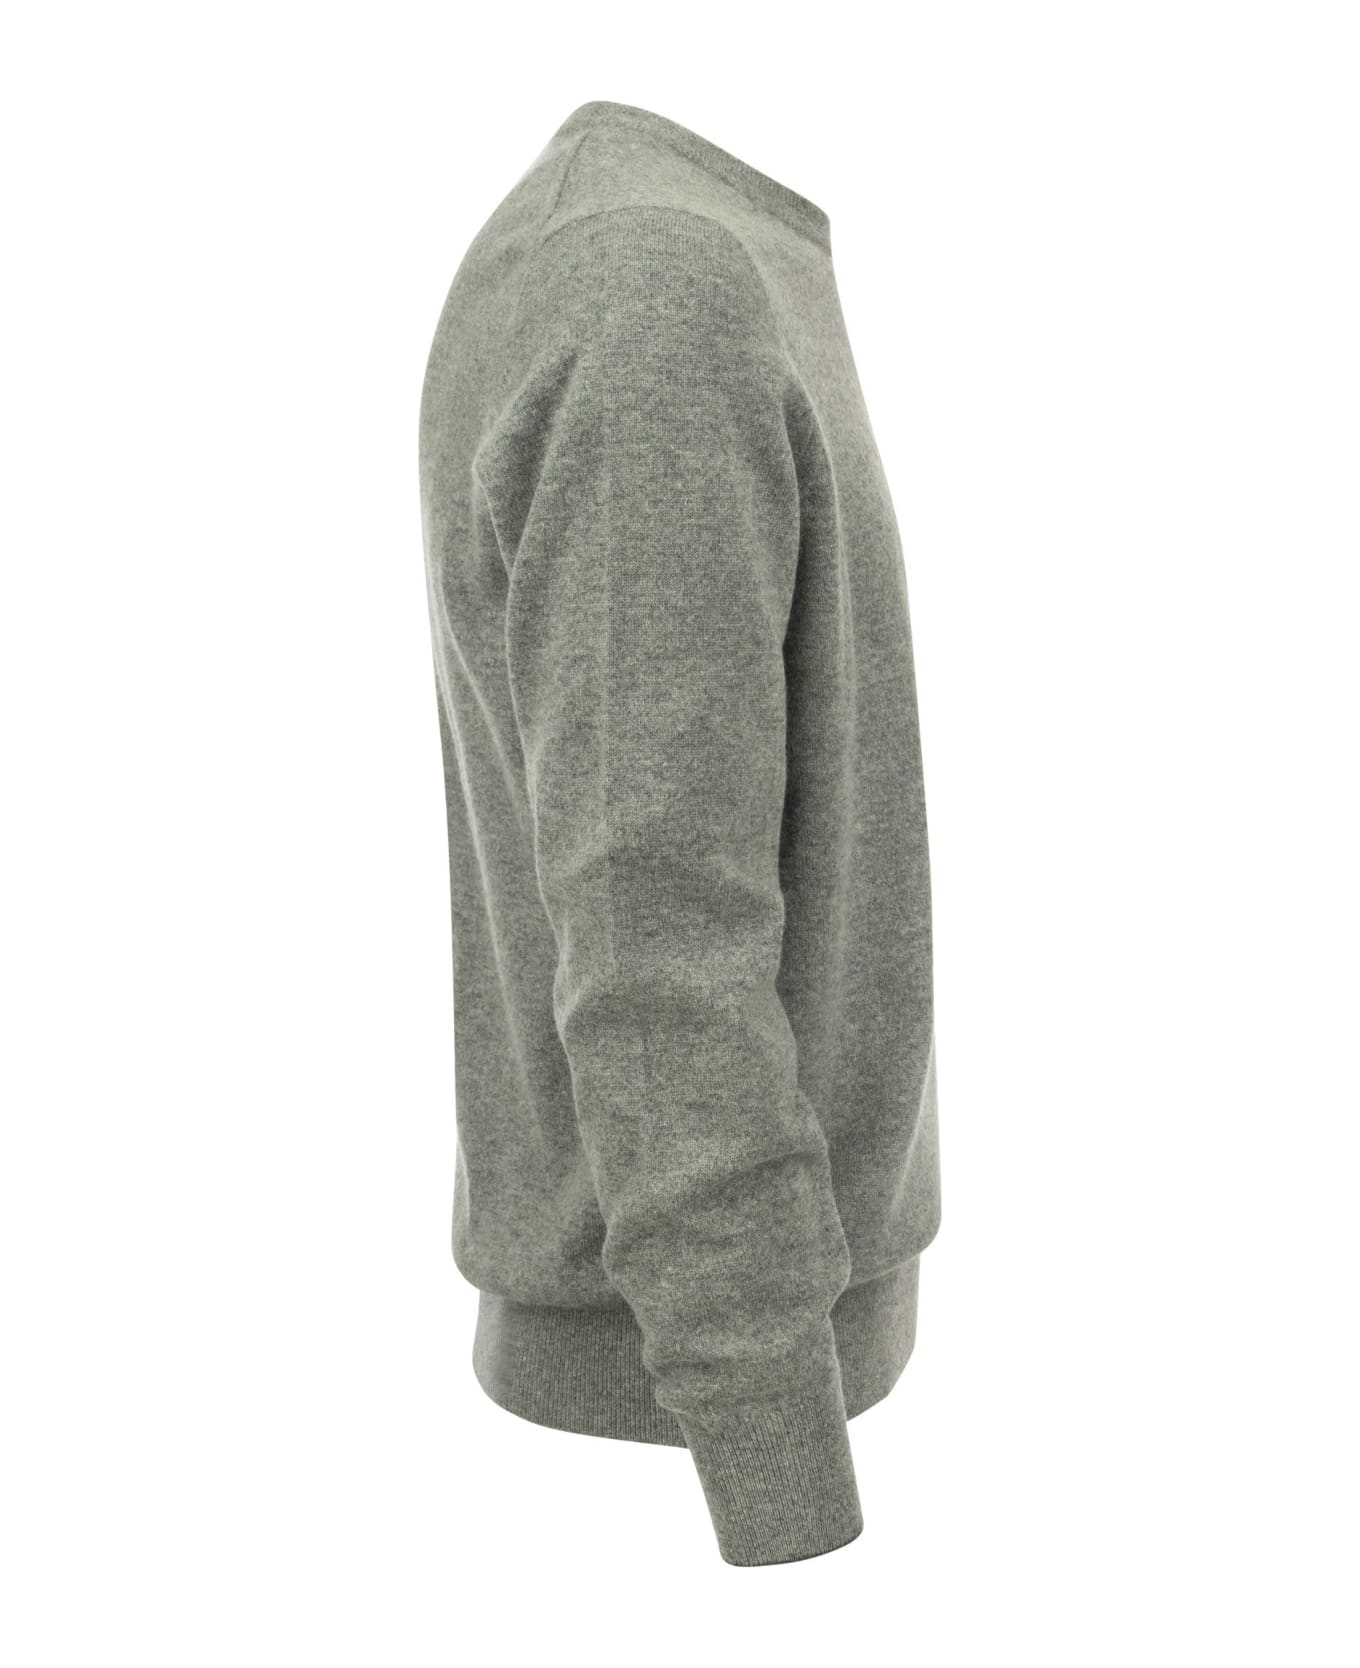 Brunello Cucinelli Pure Cashmere Crew-neck Sweater - Melange Grey